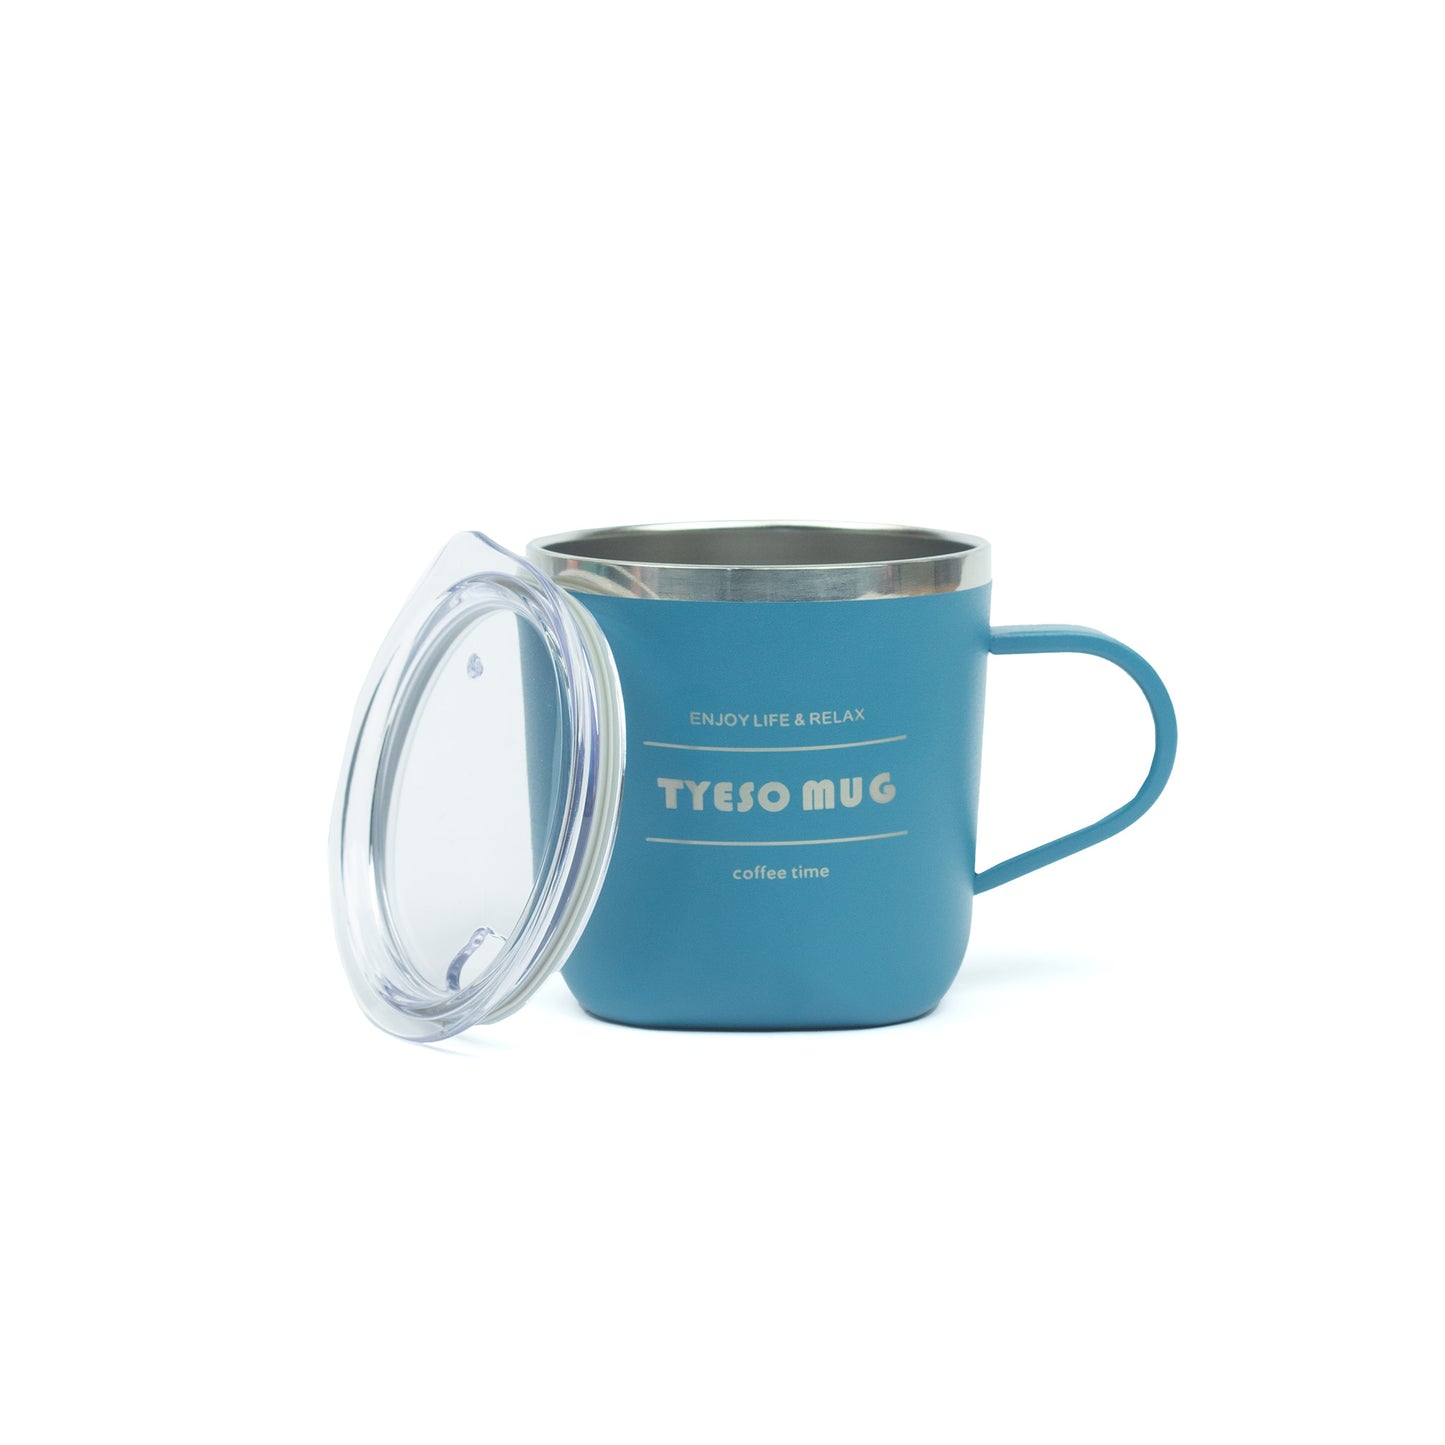 Stainless Steel Coffee/Tea Cup - 260ml